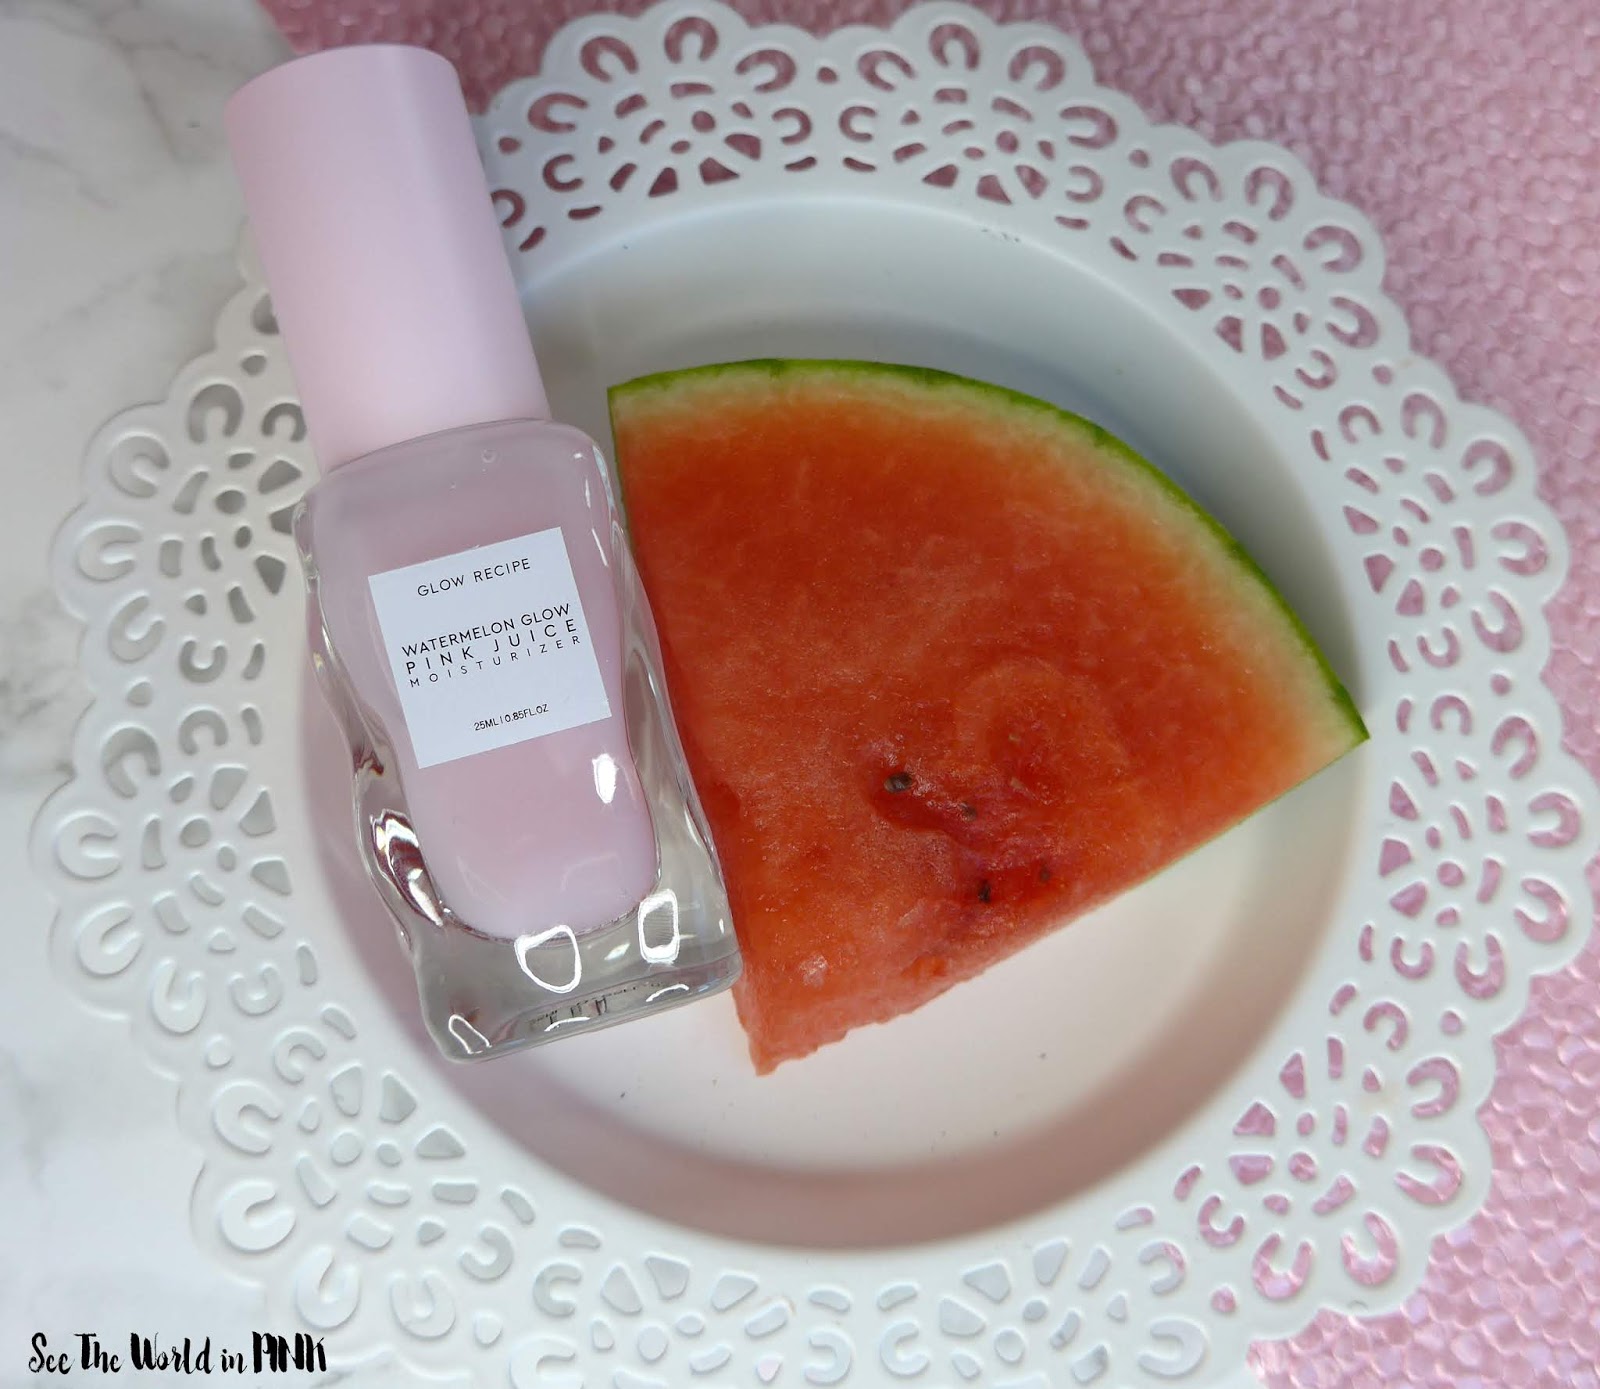 Glow Recipe Watermelon Pink Juice Moisturizer